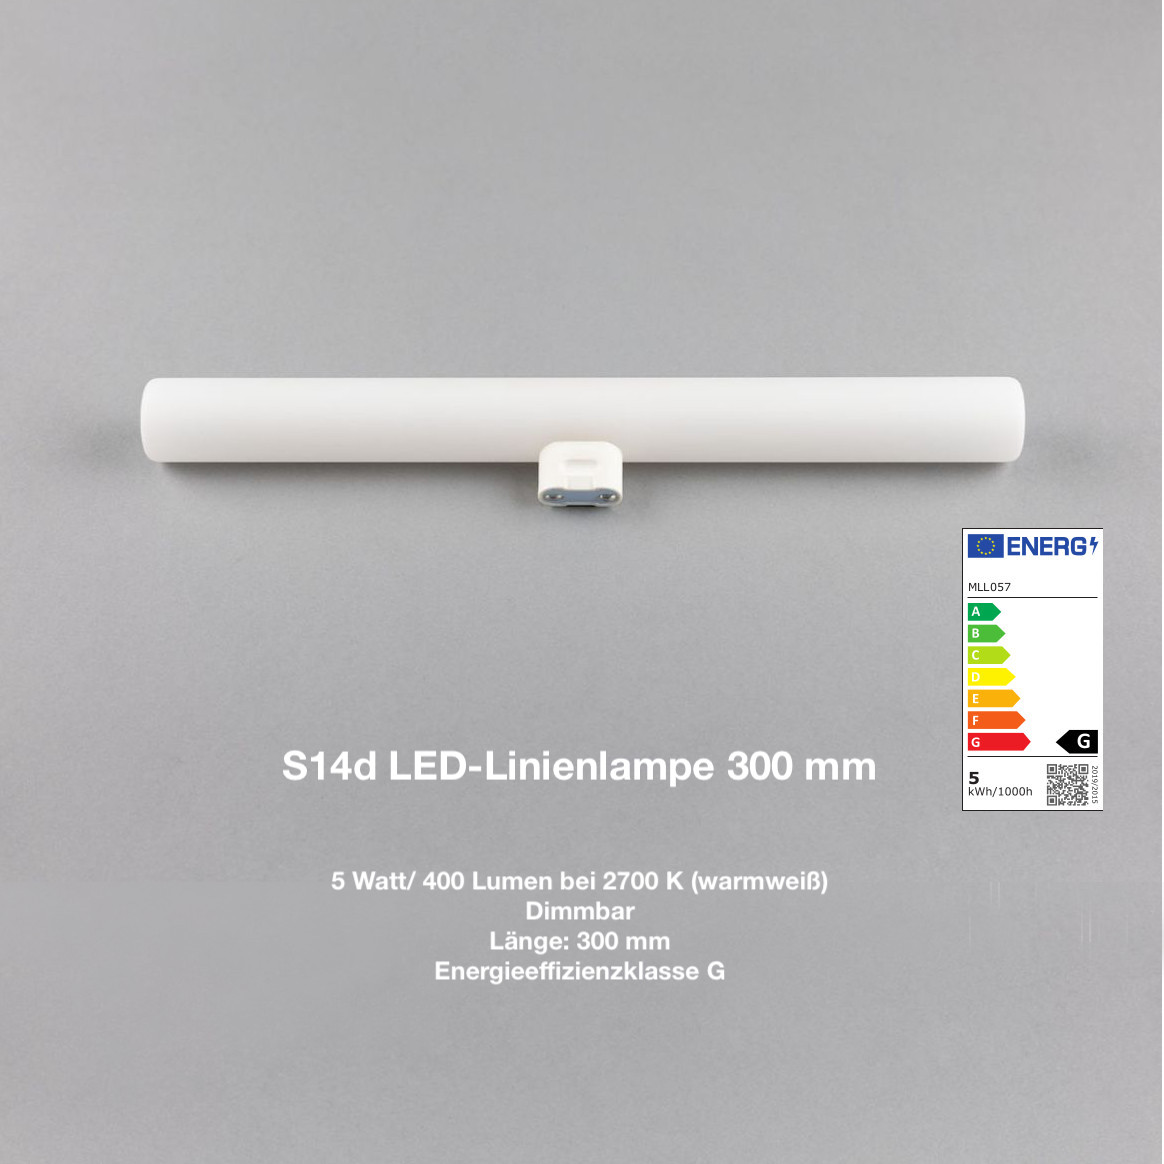 S14d LED-Linienlampe 300 mm, 5 Watt, G, Bild 